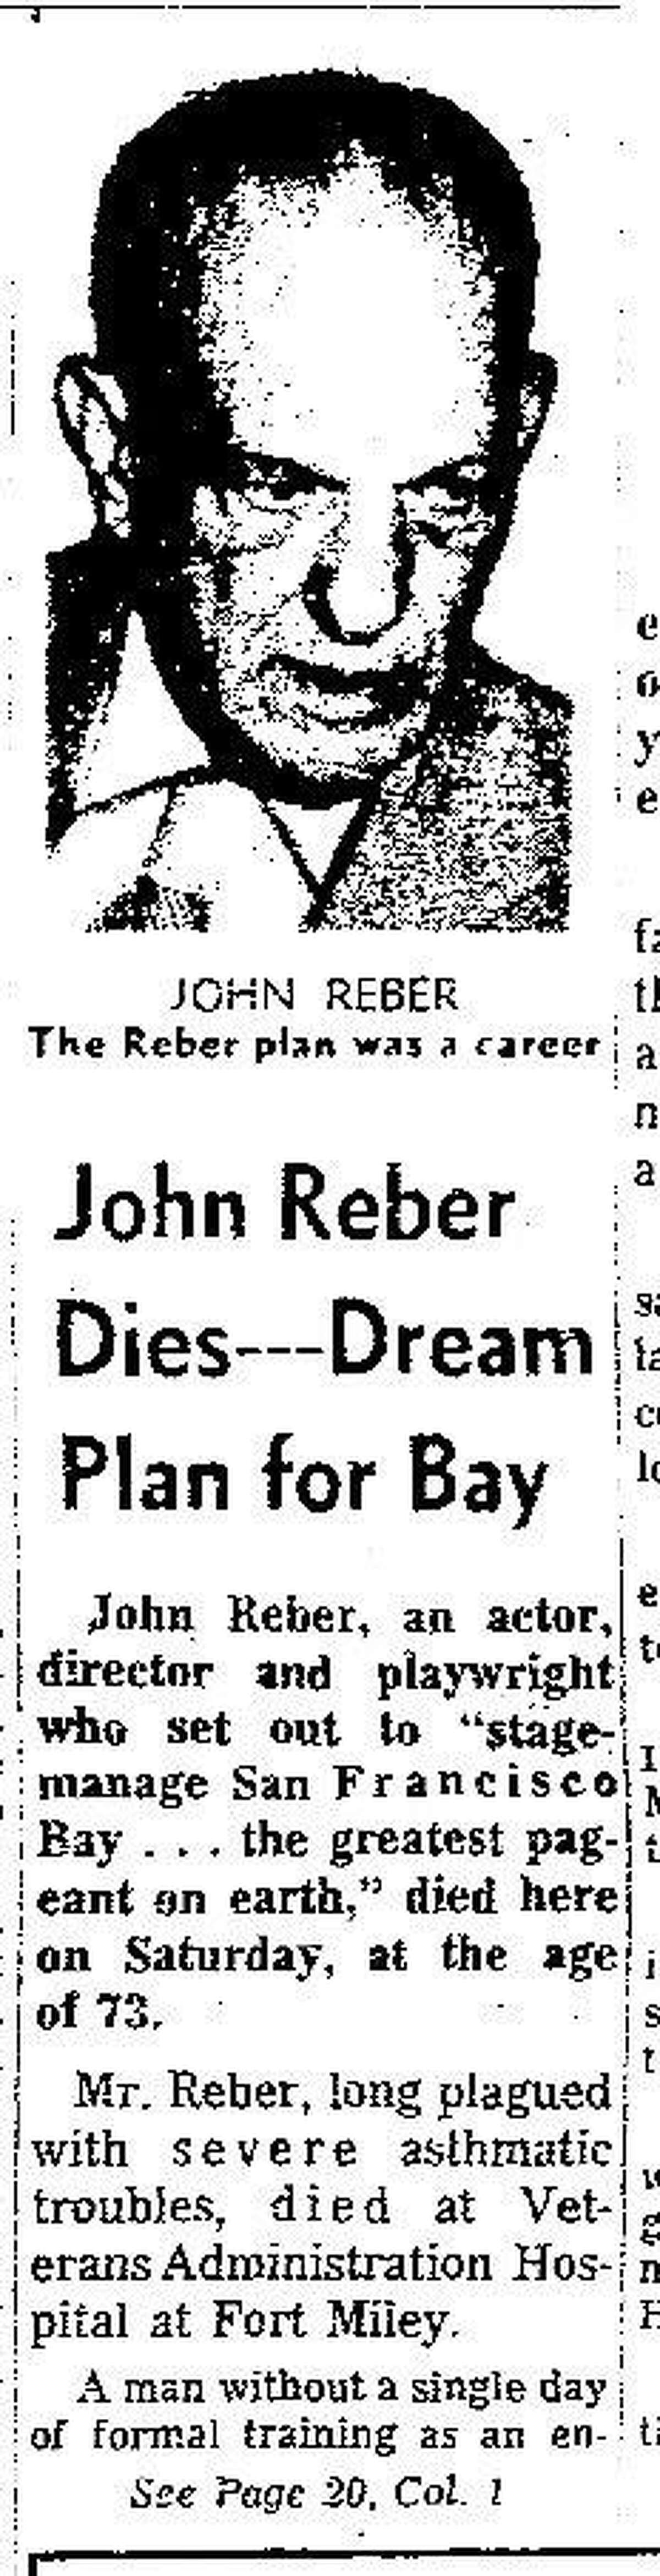 The San Francisco Chronicle obituary for John Reber ran Oct. 17, 1960.